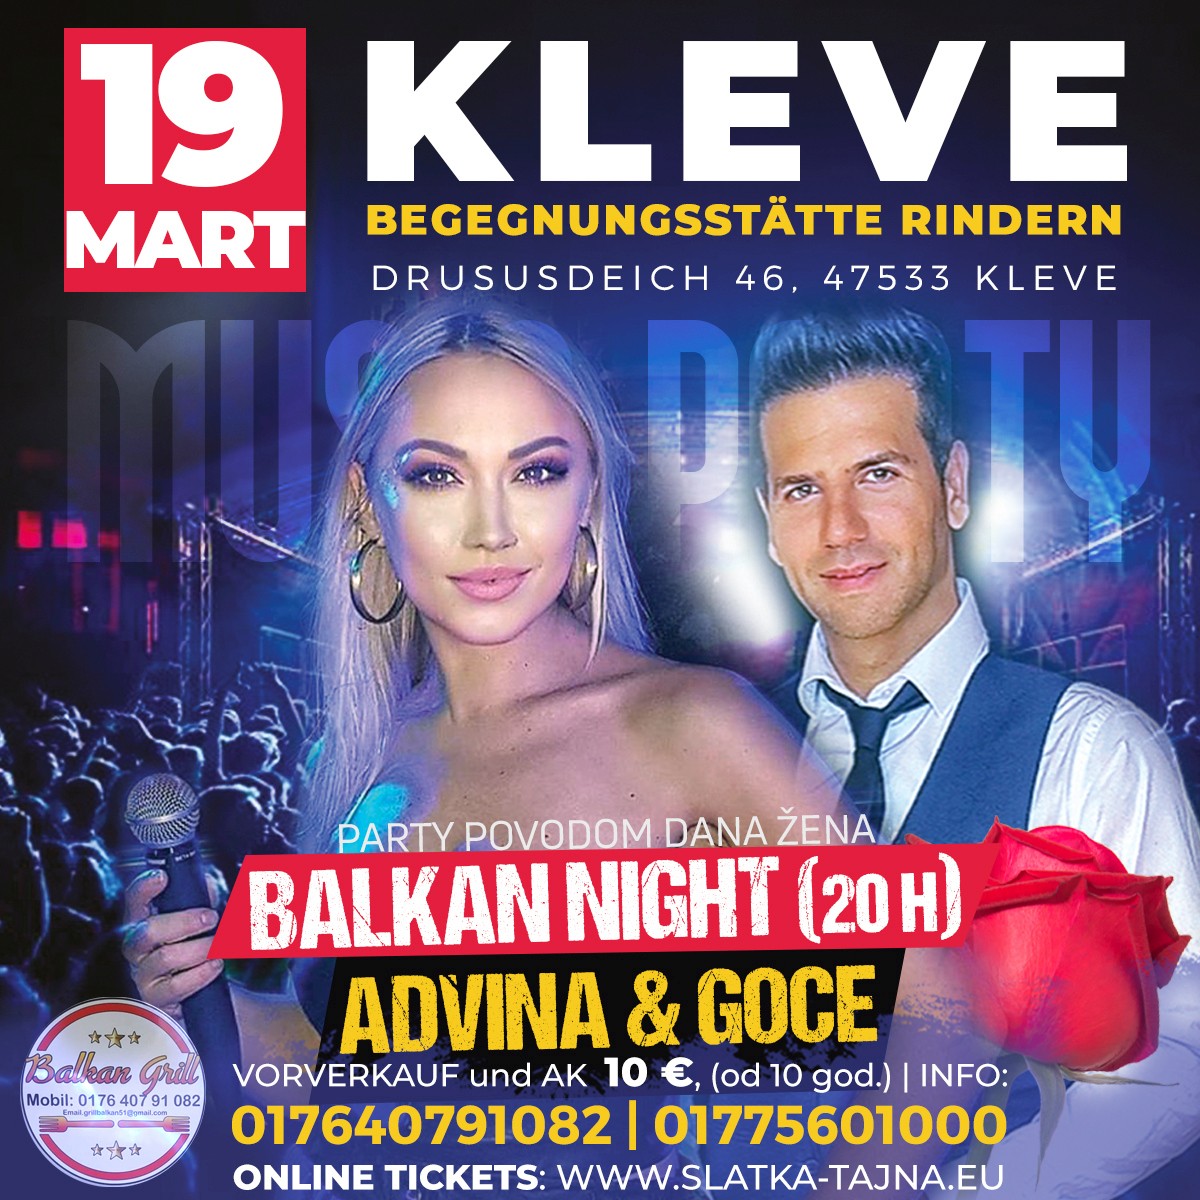 19.03. KLEVE – Balkan Party – Advina & Goce